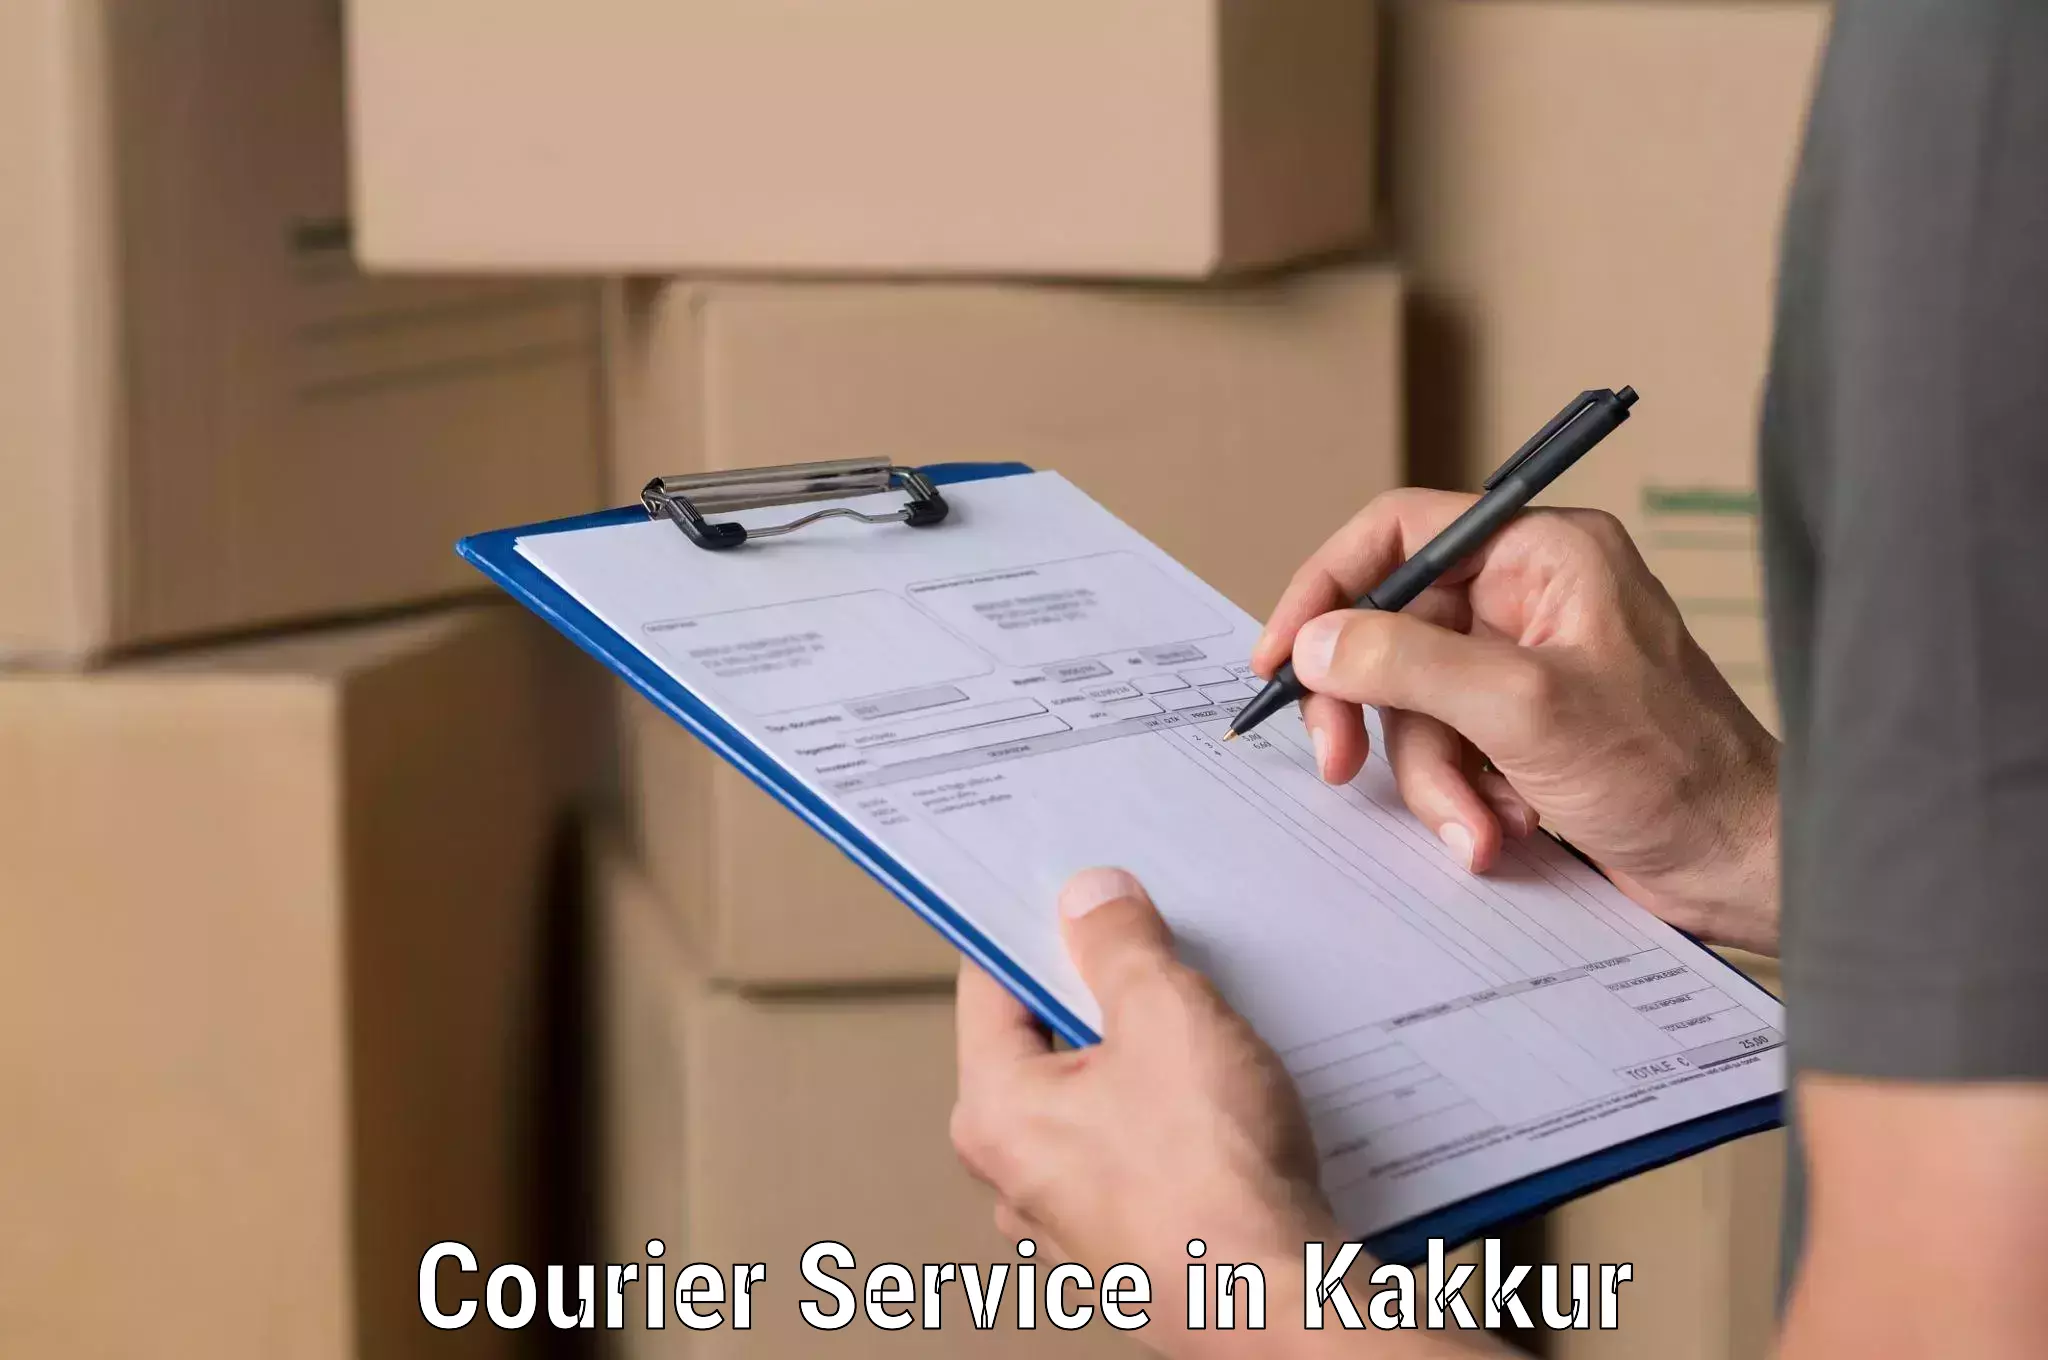 Expedited parcel delivery in Kakkur